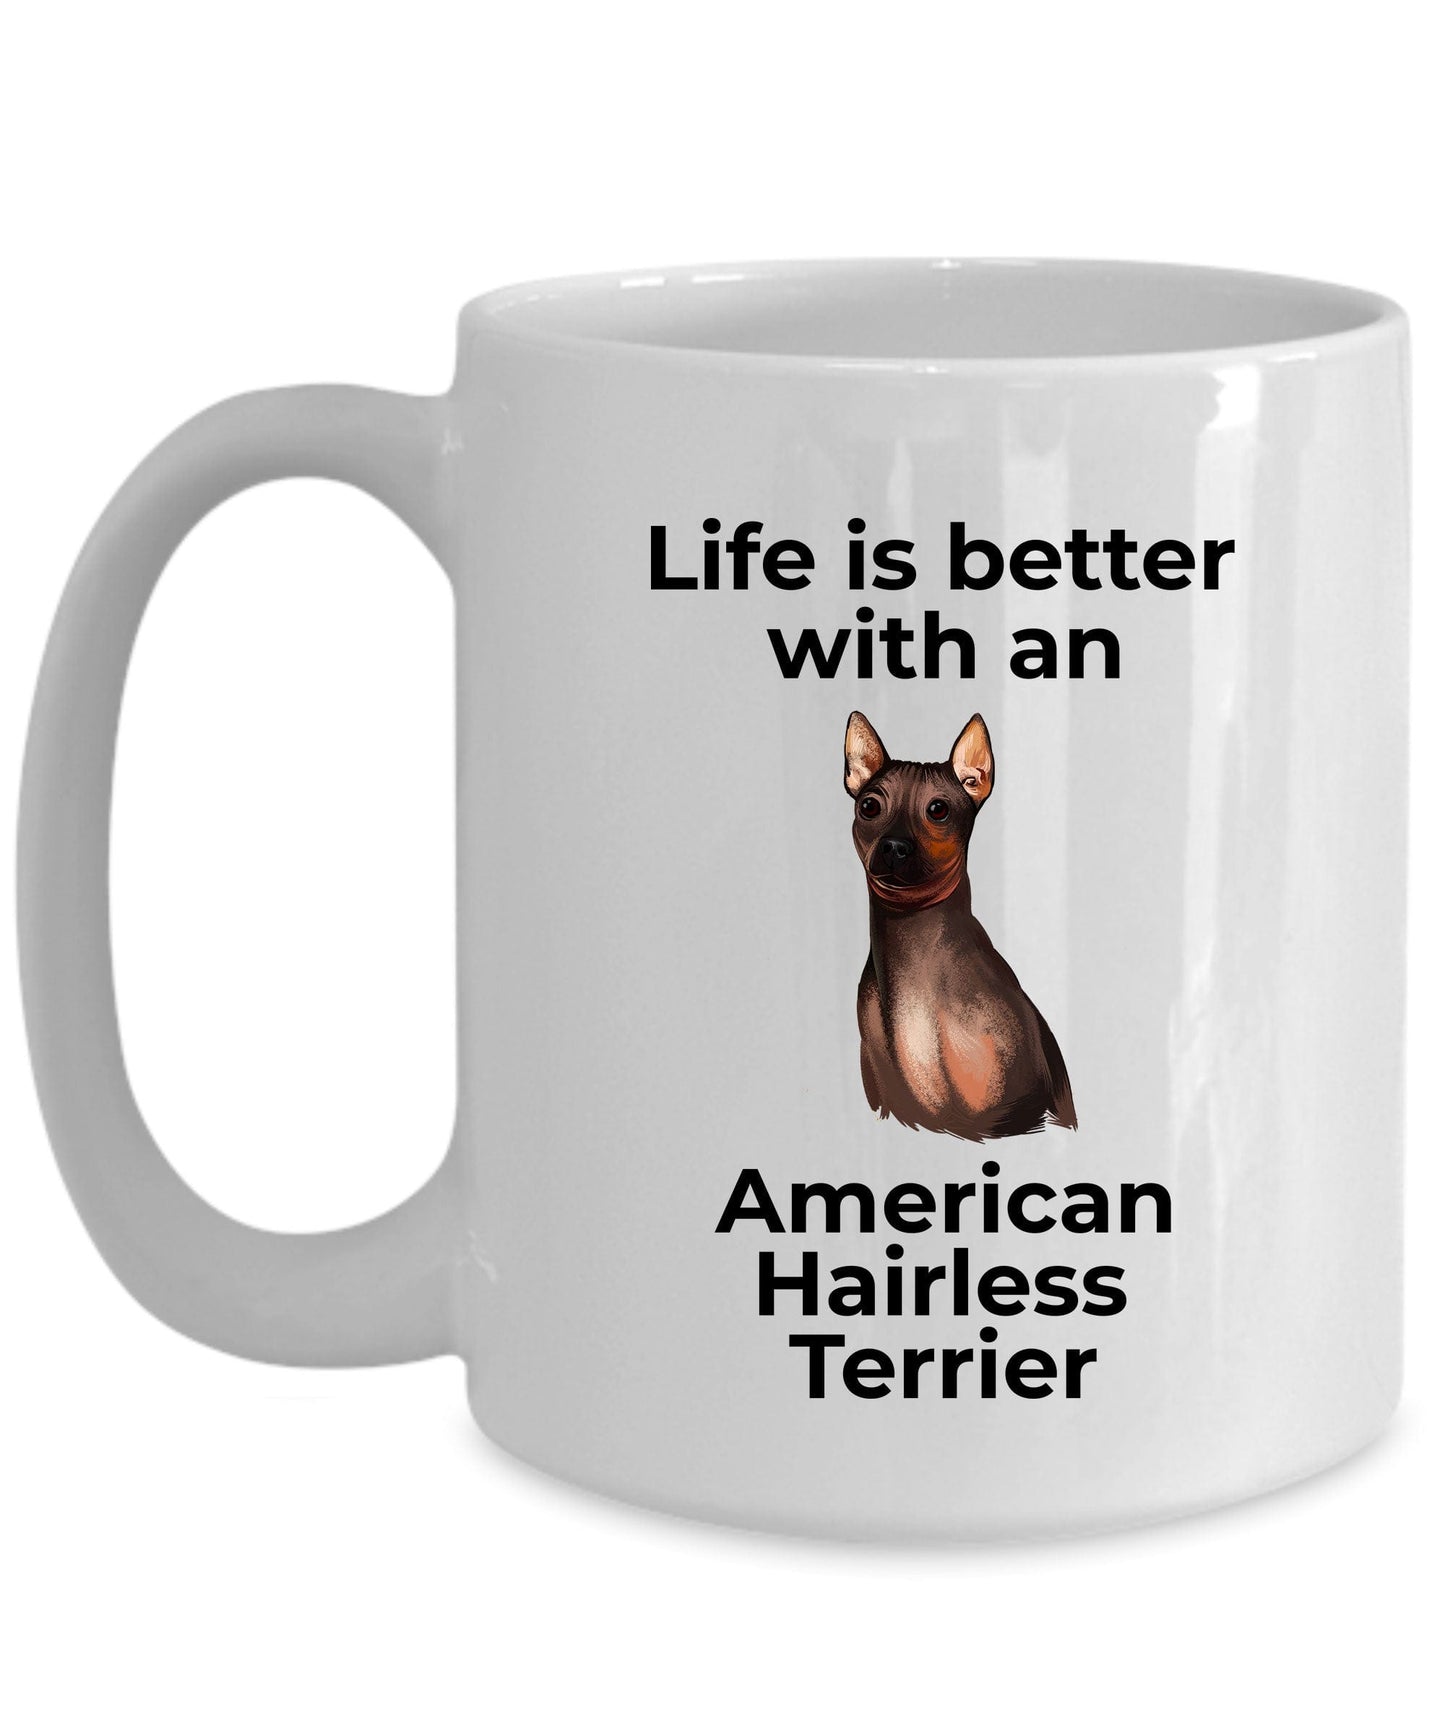 American Hairless Terrier Dog Coffee Mug - Life is better with an American Hairless Terrier